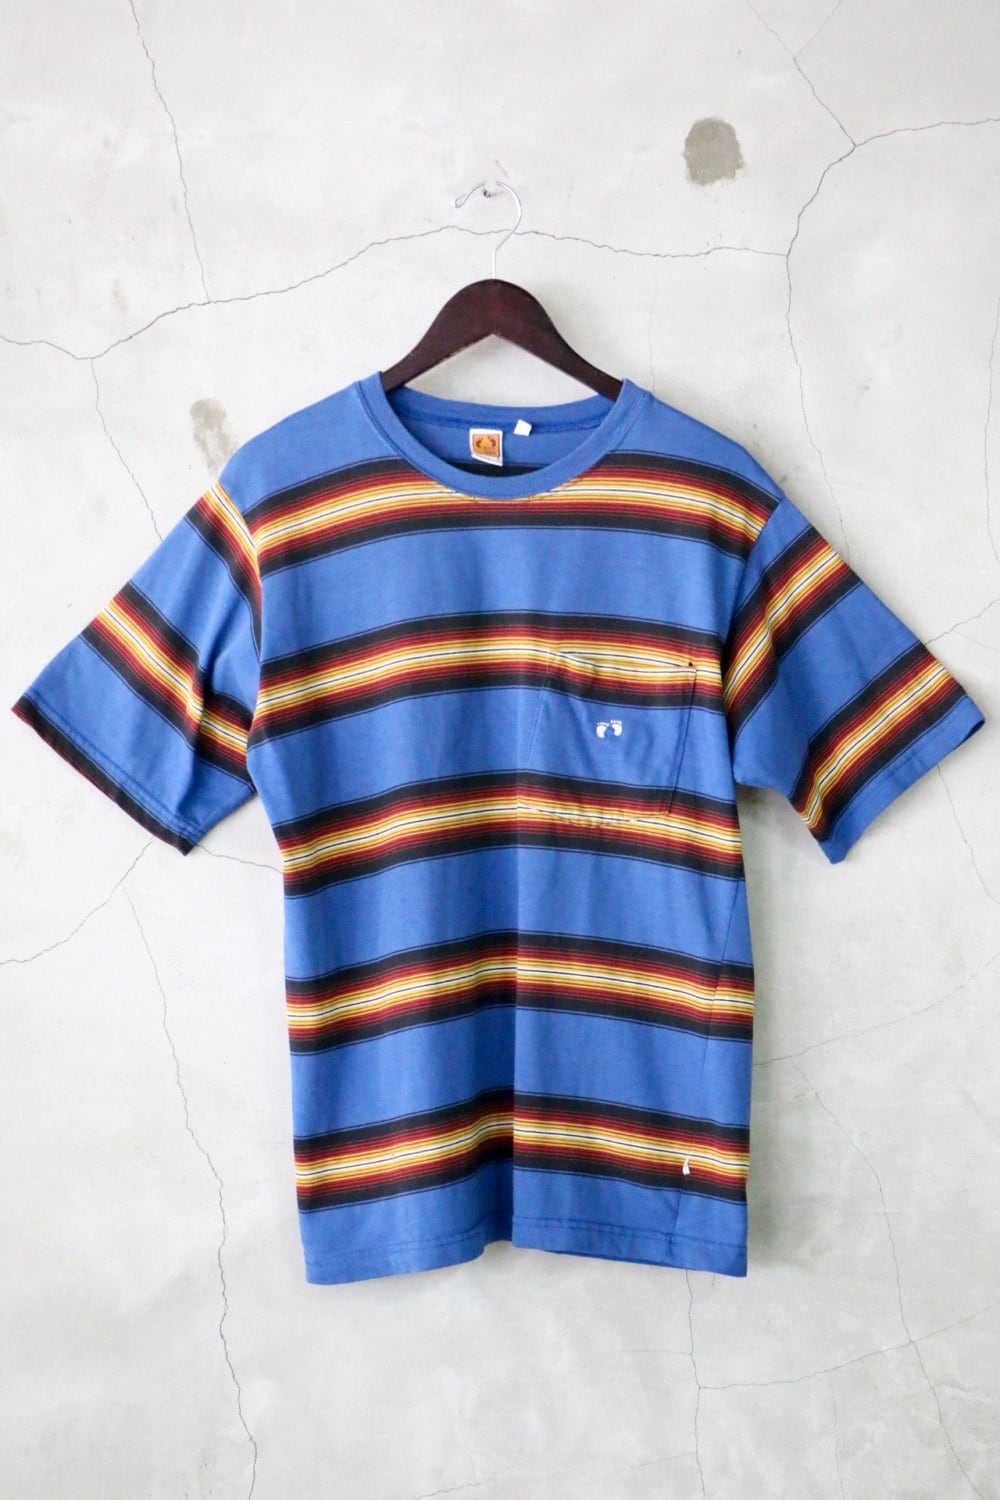 vintage 70s hang ten surf t shirt blue striped by imtryingtofocus